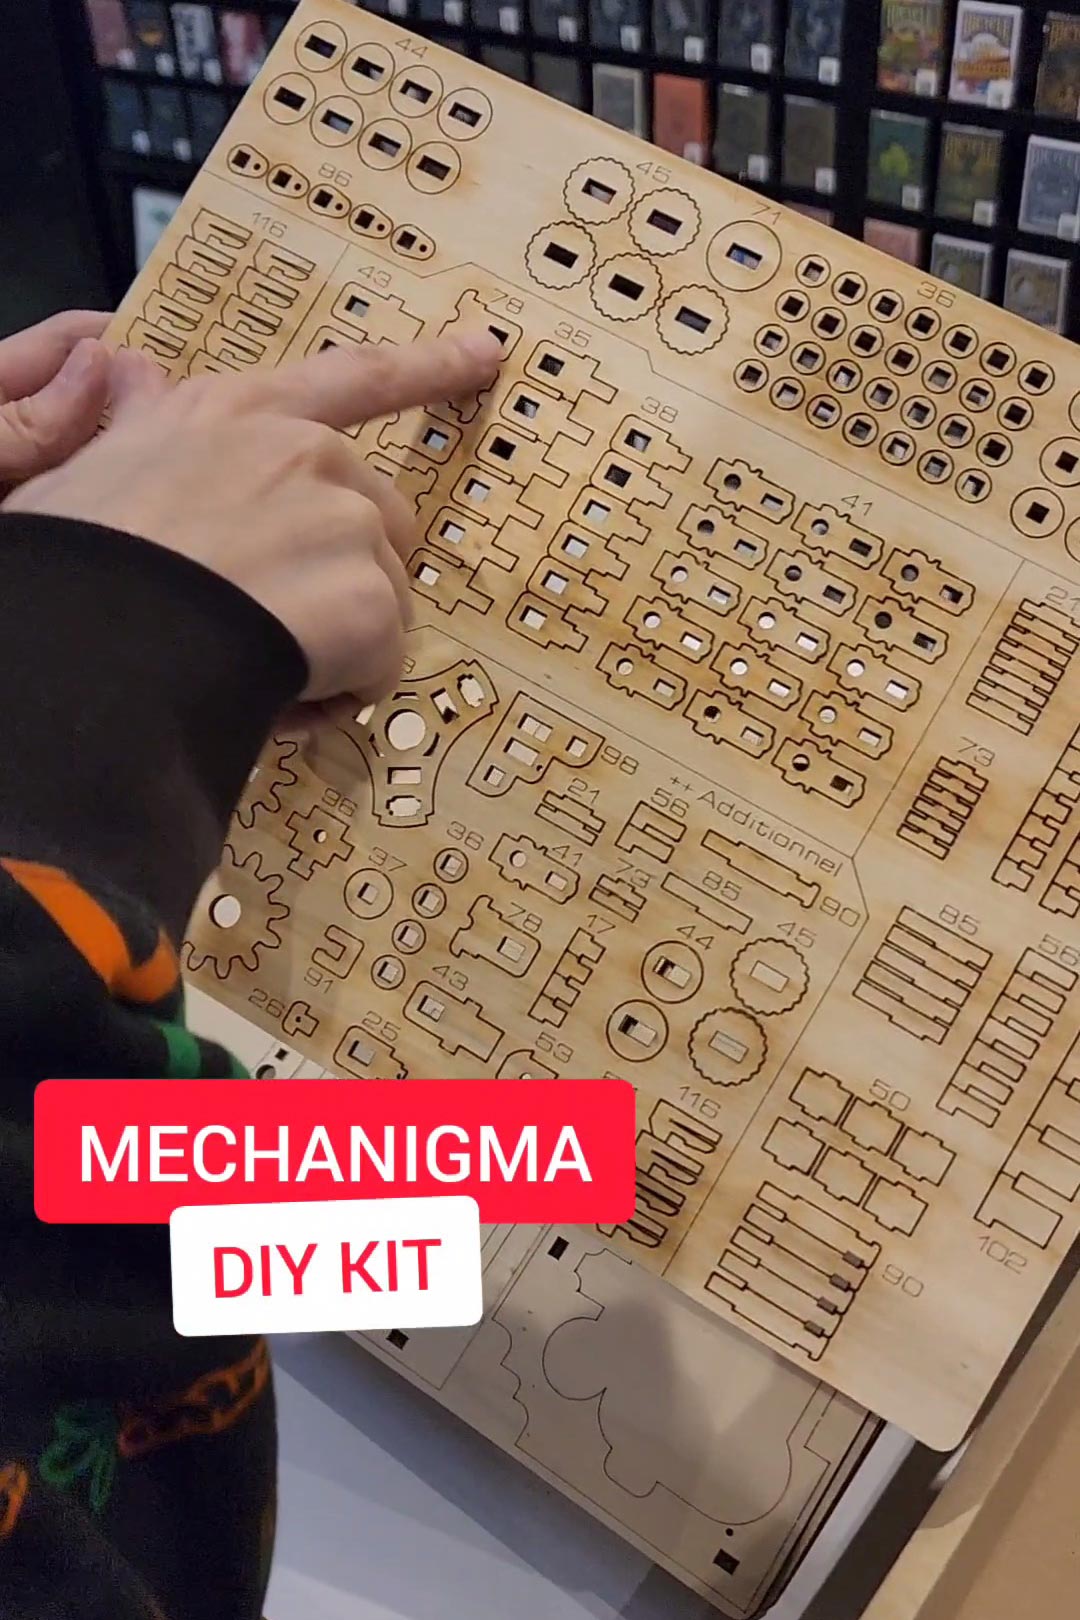 The Mecanigma DIY Kit